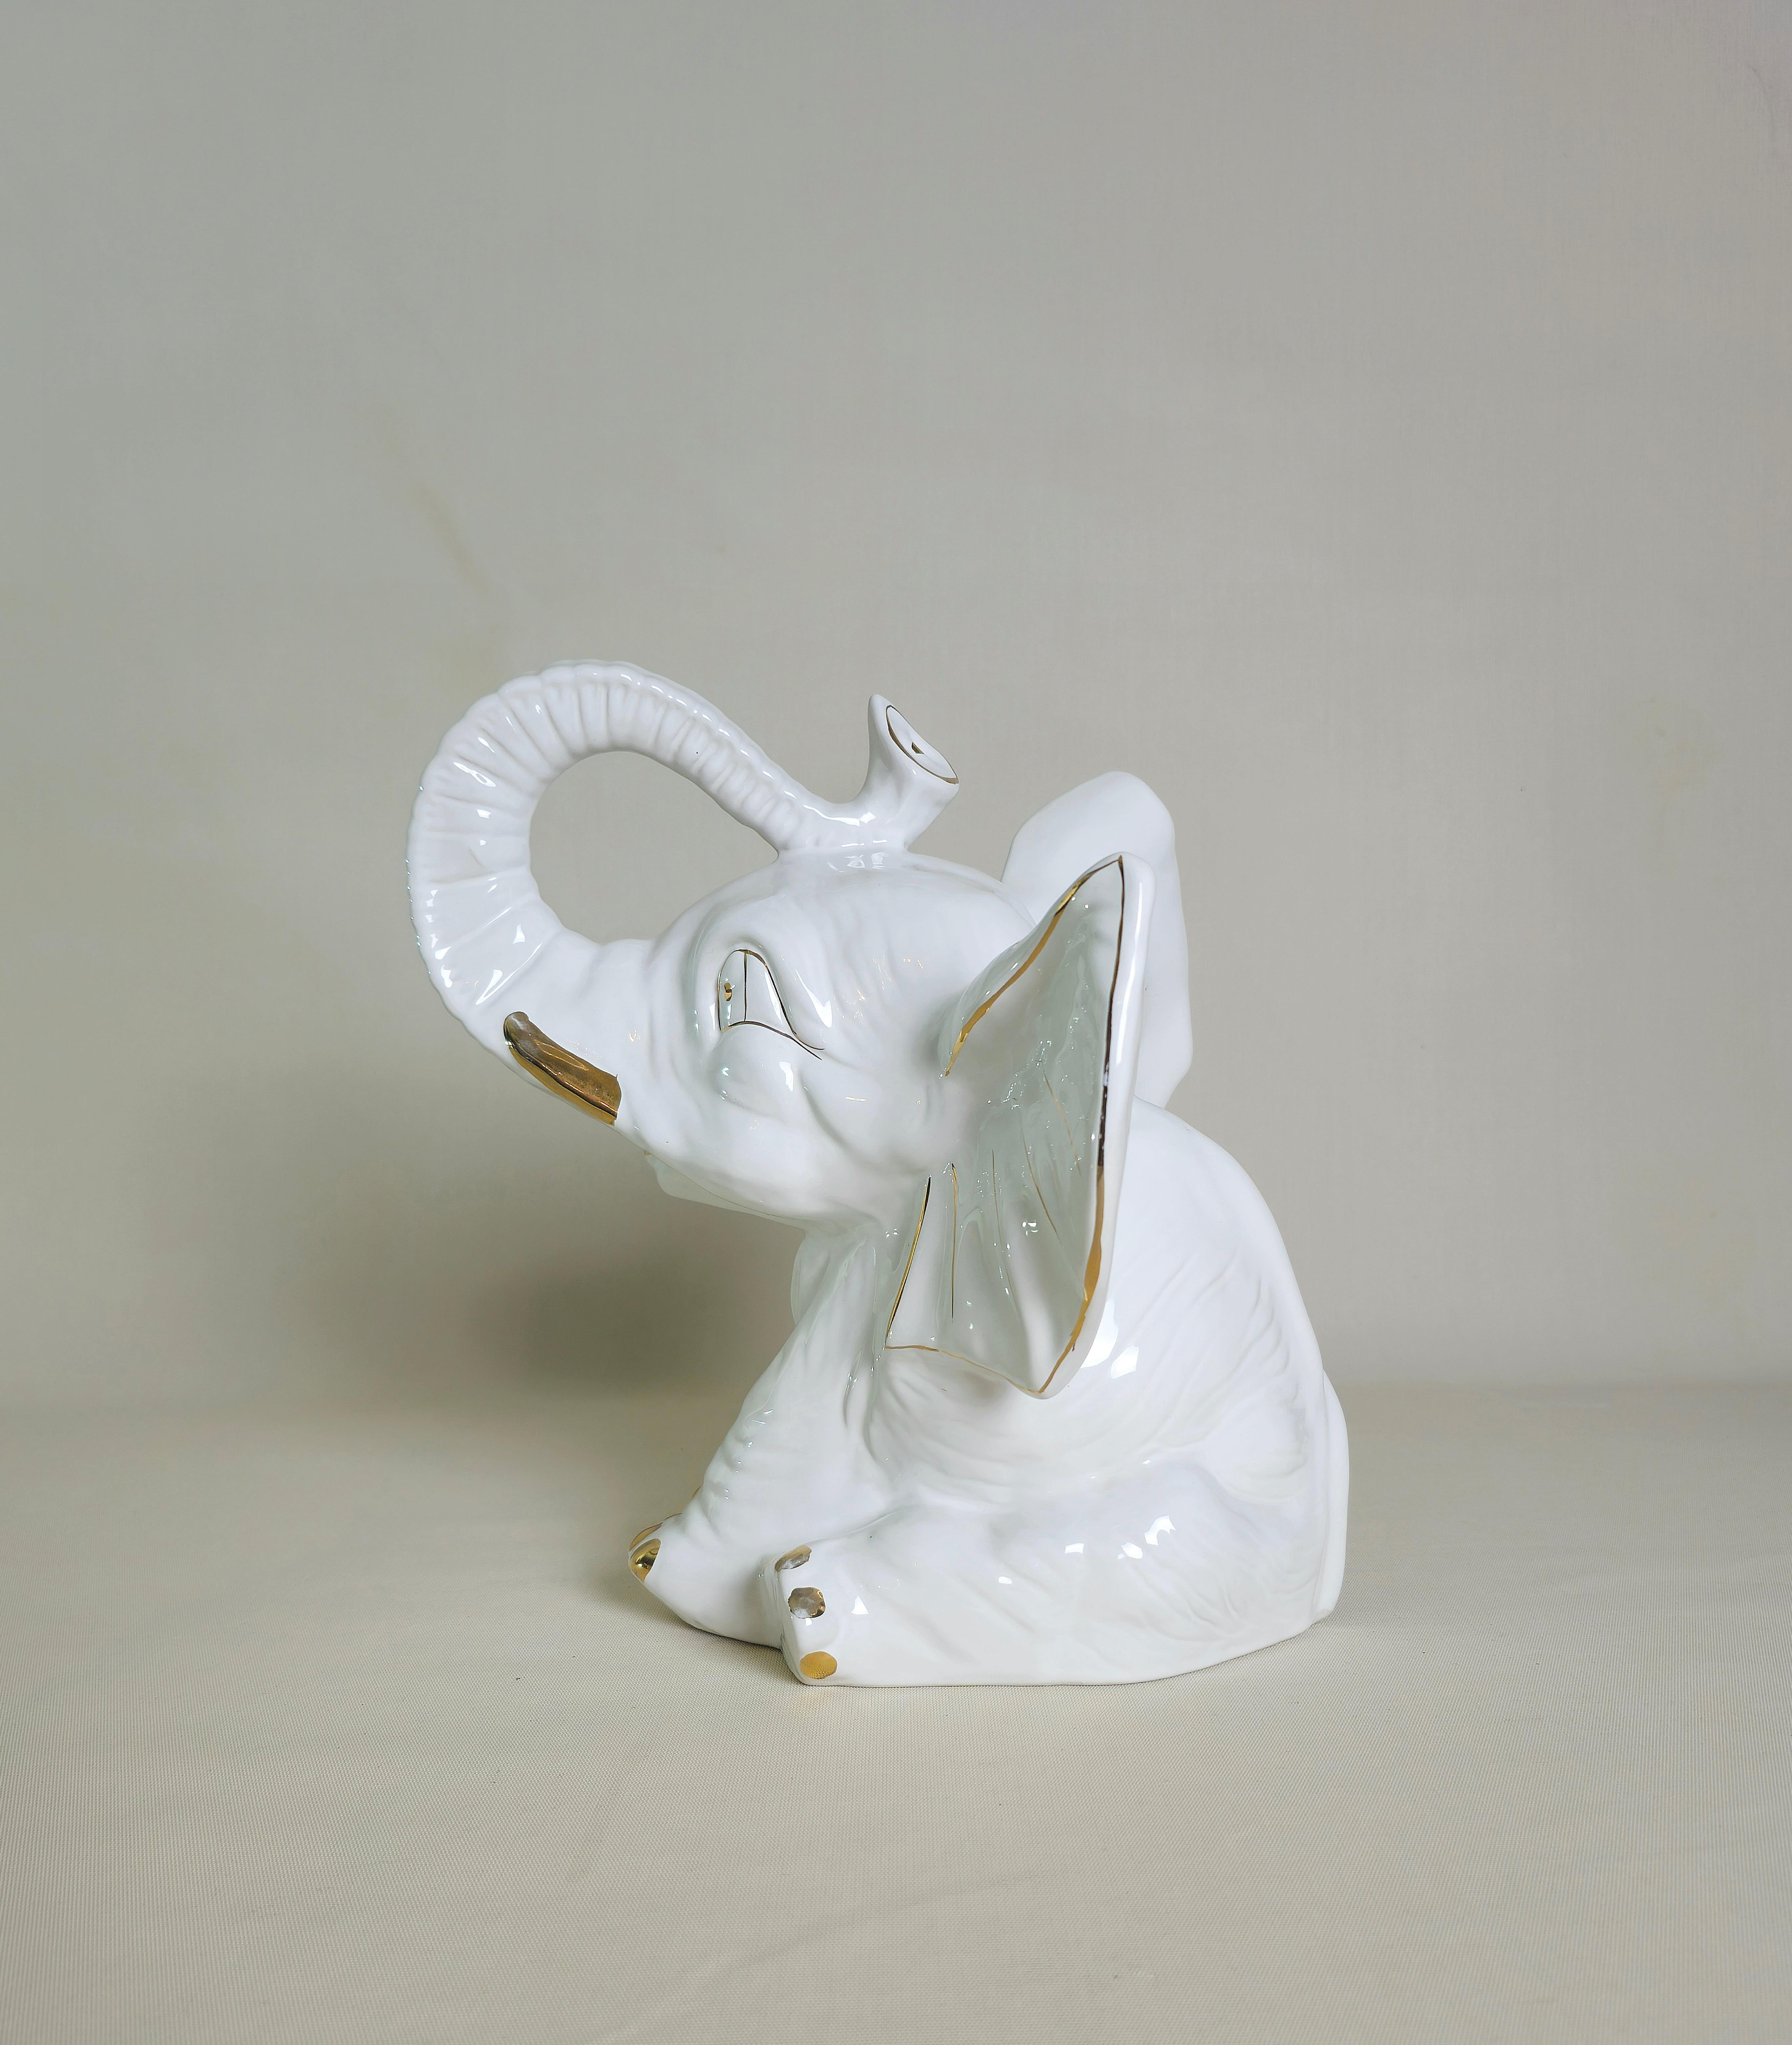 Decorative Object Elephant Porcelain Midcentury Modern Italian Design 1970s For Sale 3